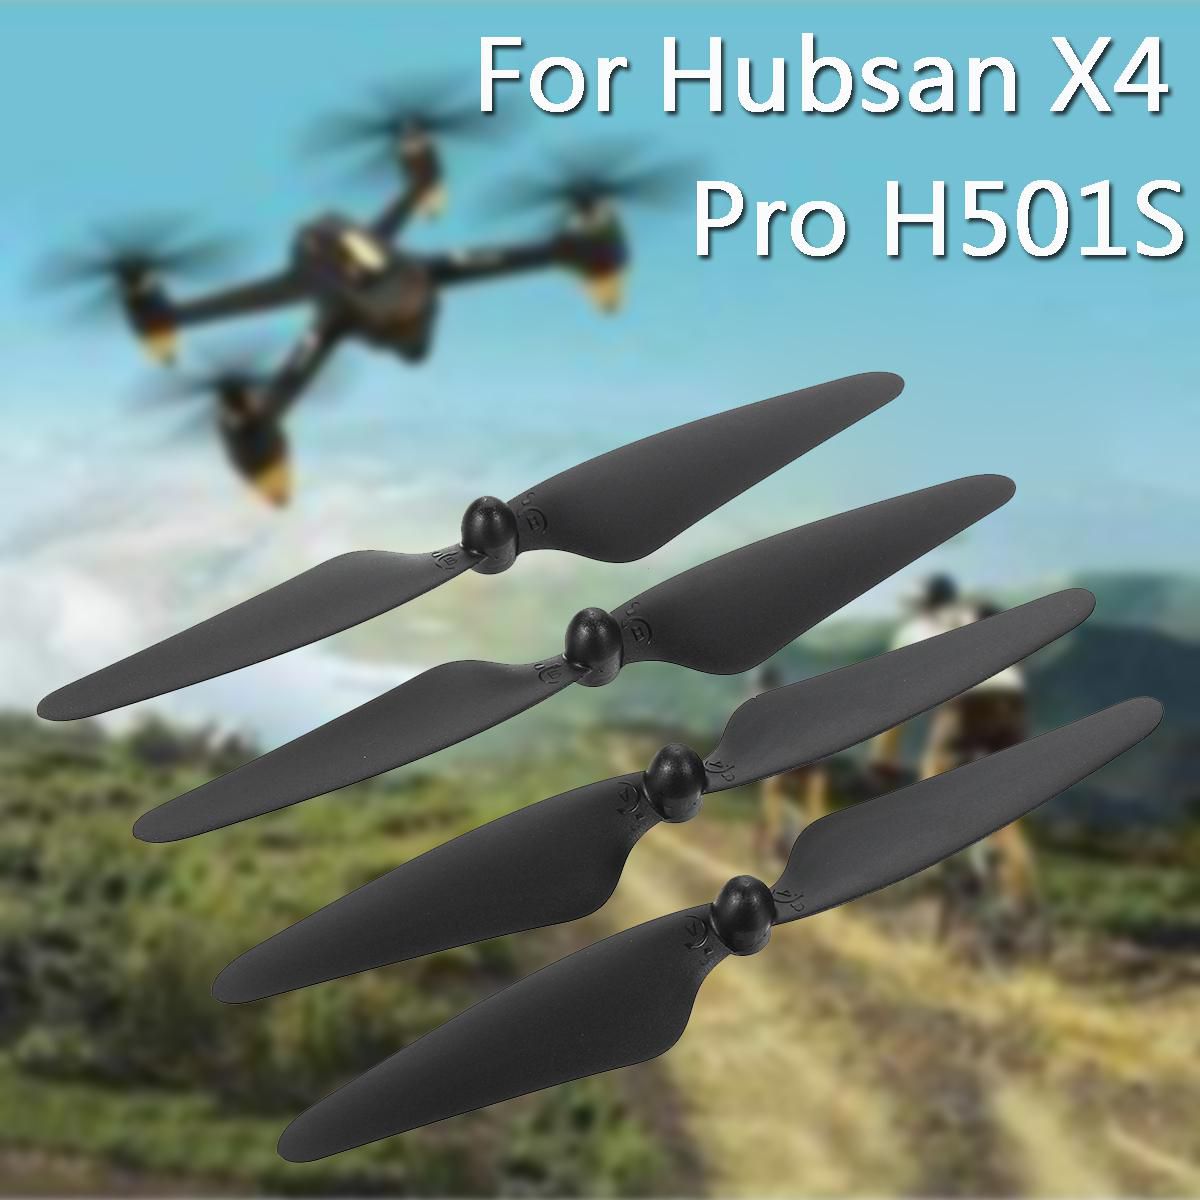 4Pcs Black Original Blade Propeller for Hubsan X4 Pro H501S RC Quadcopter Parts